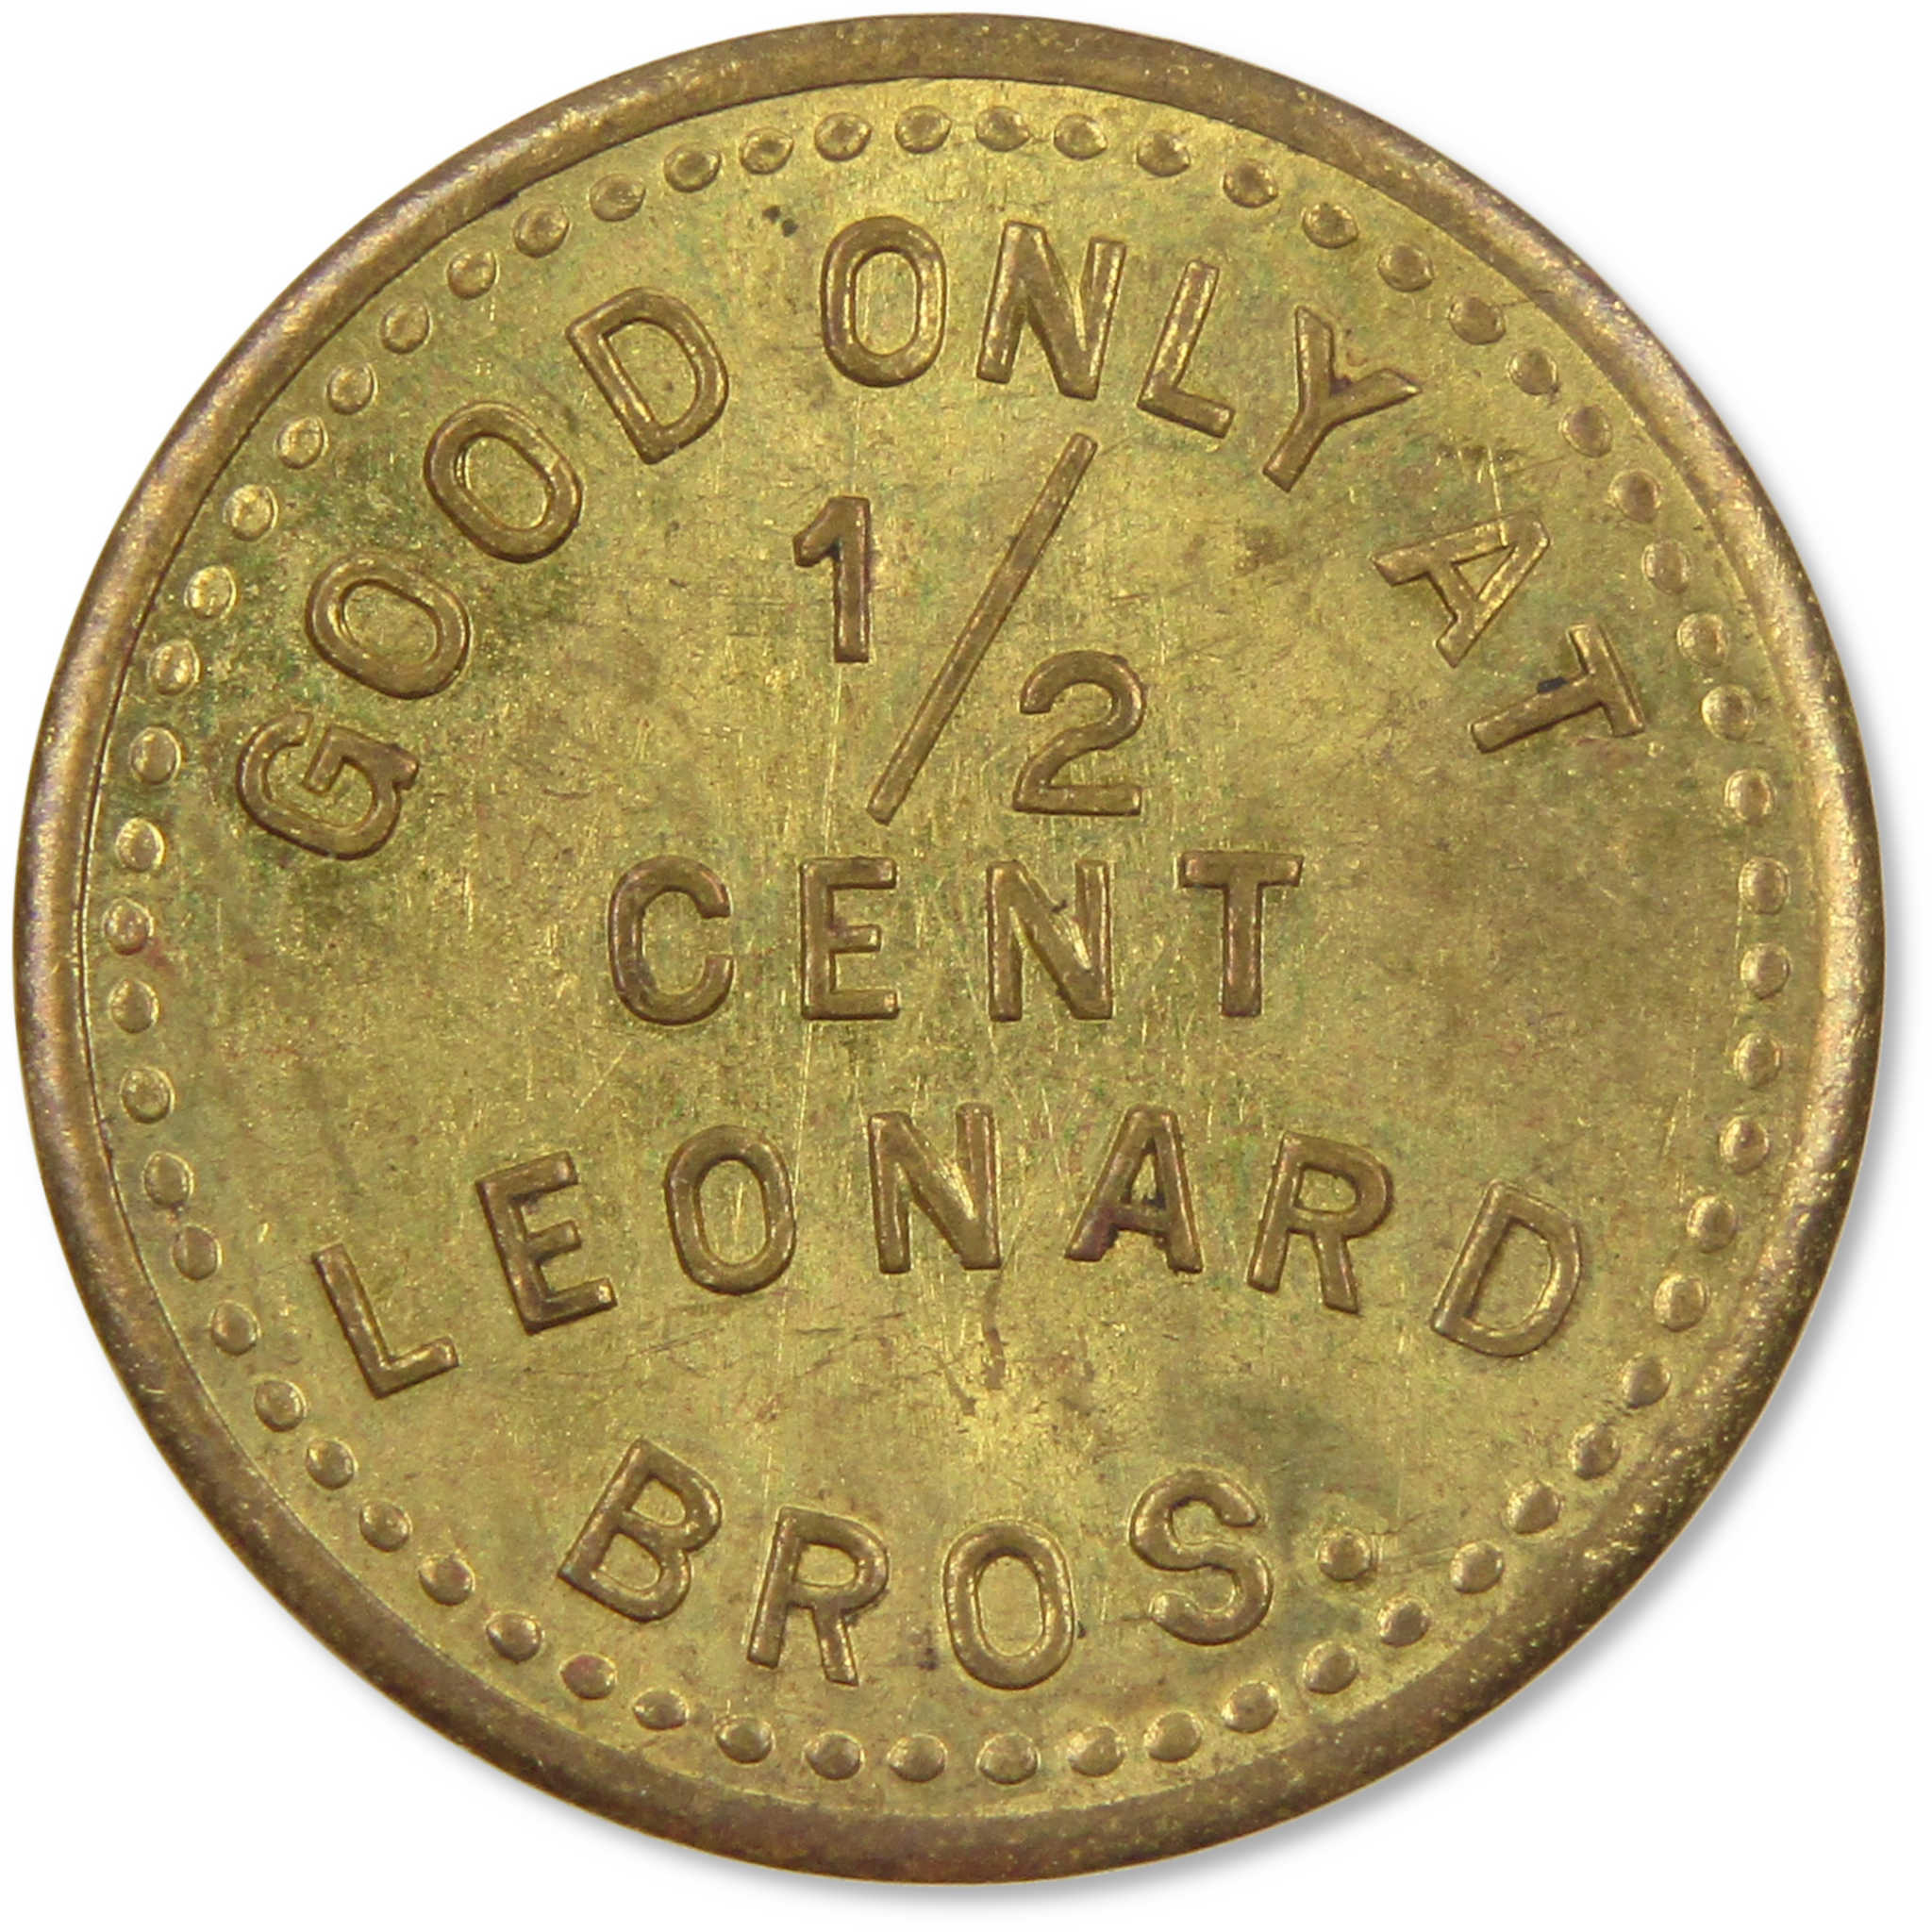 1933 Leonard's Brass Trade Token Set